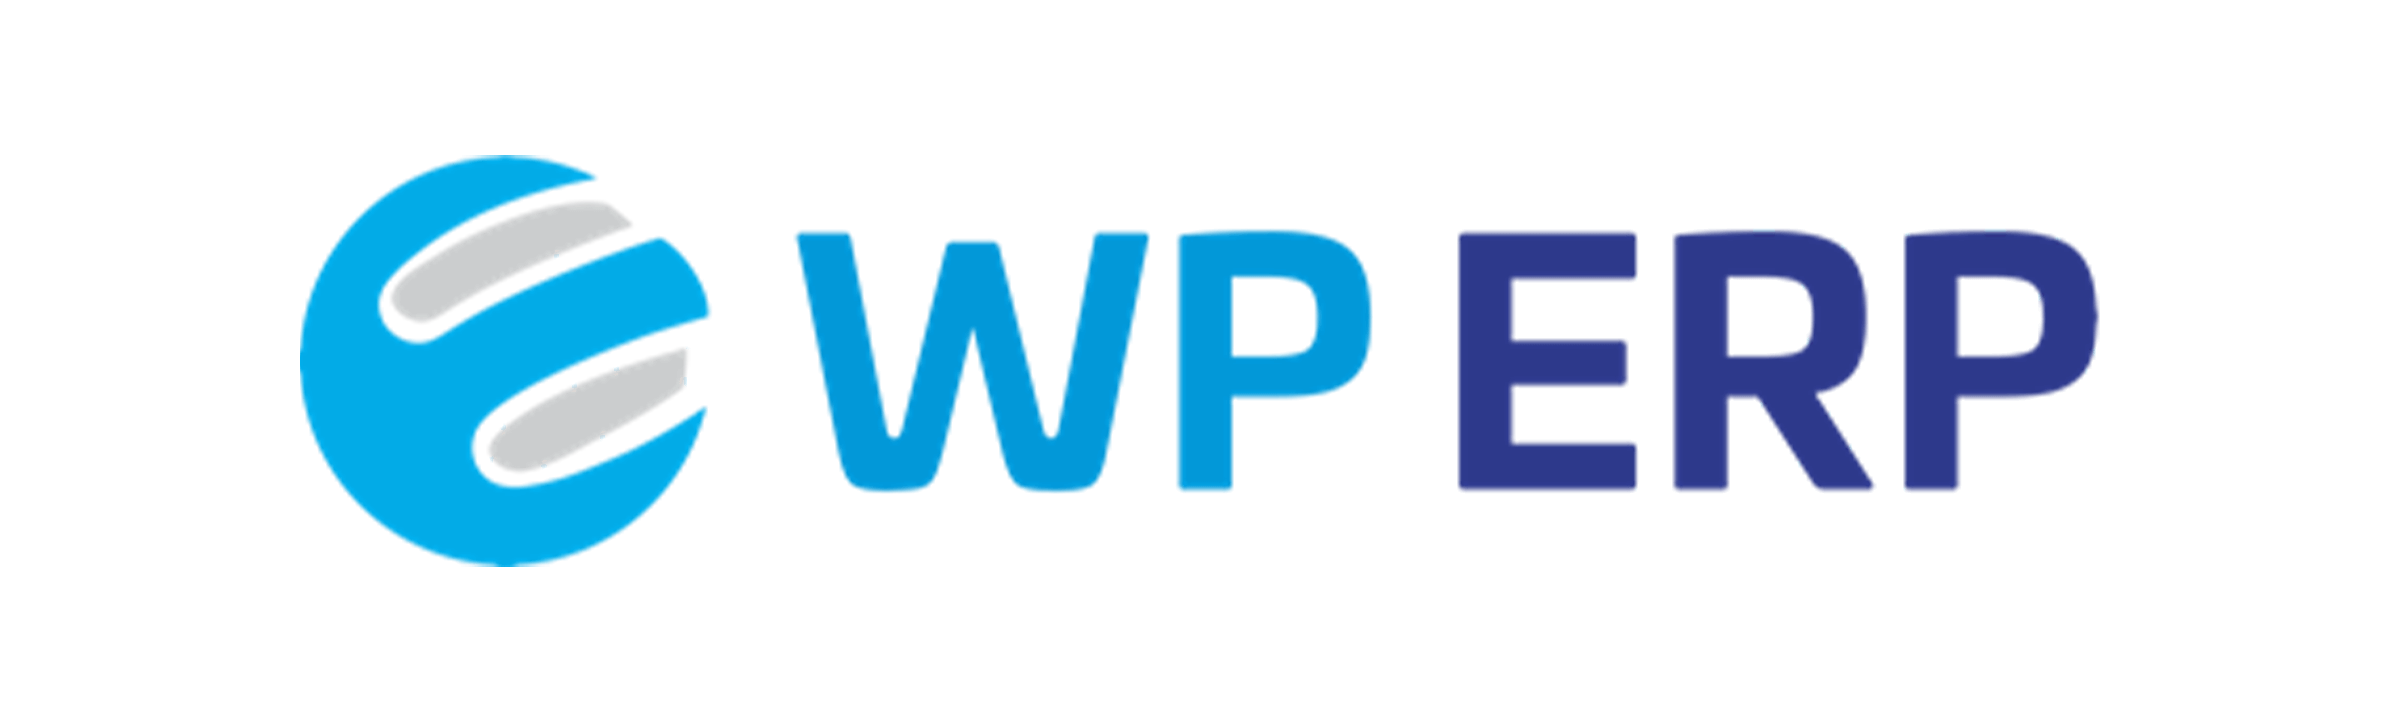 We ERP logo